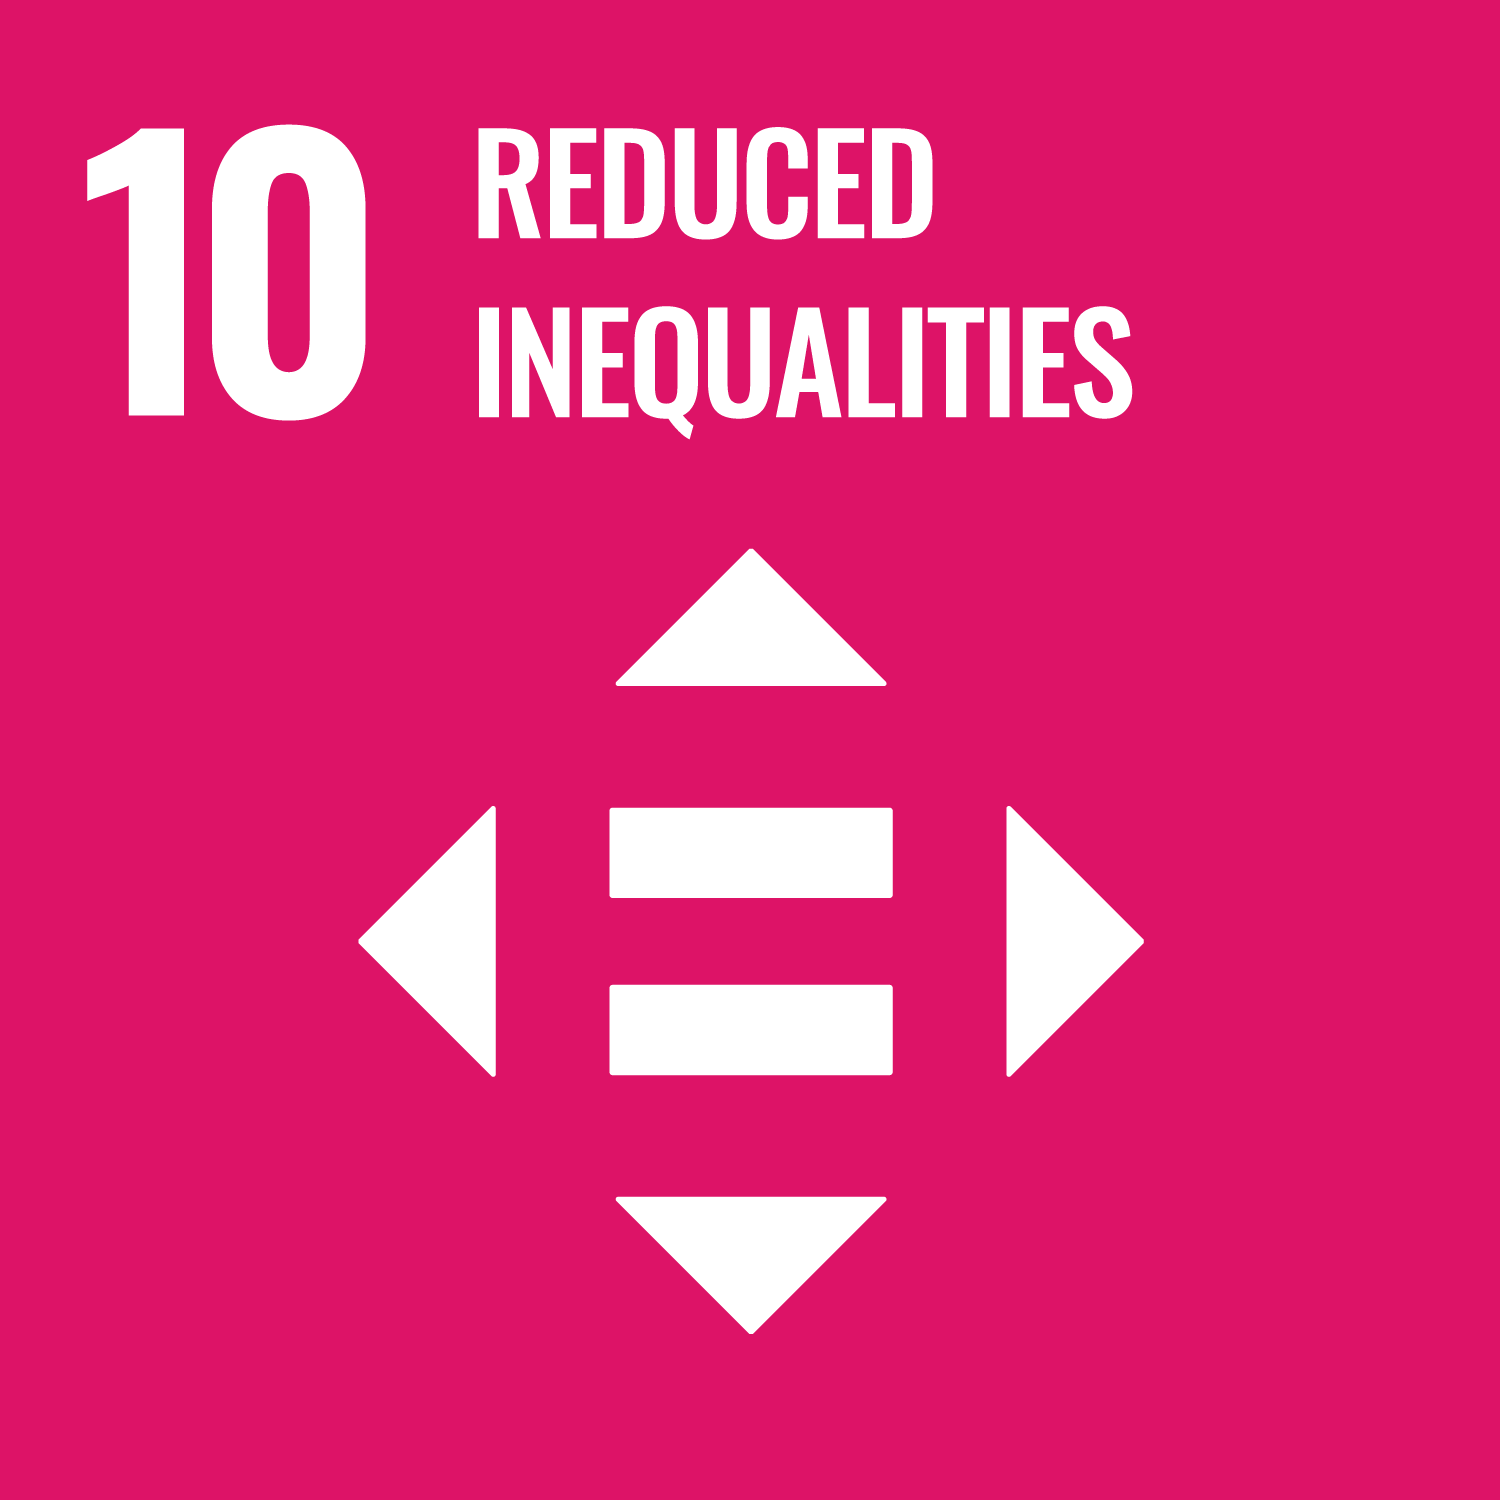 Reduced inequalities logo.